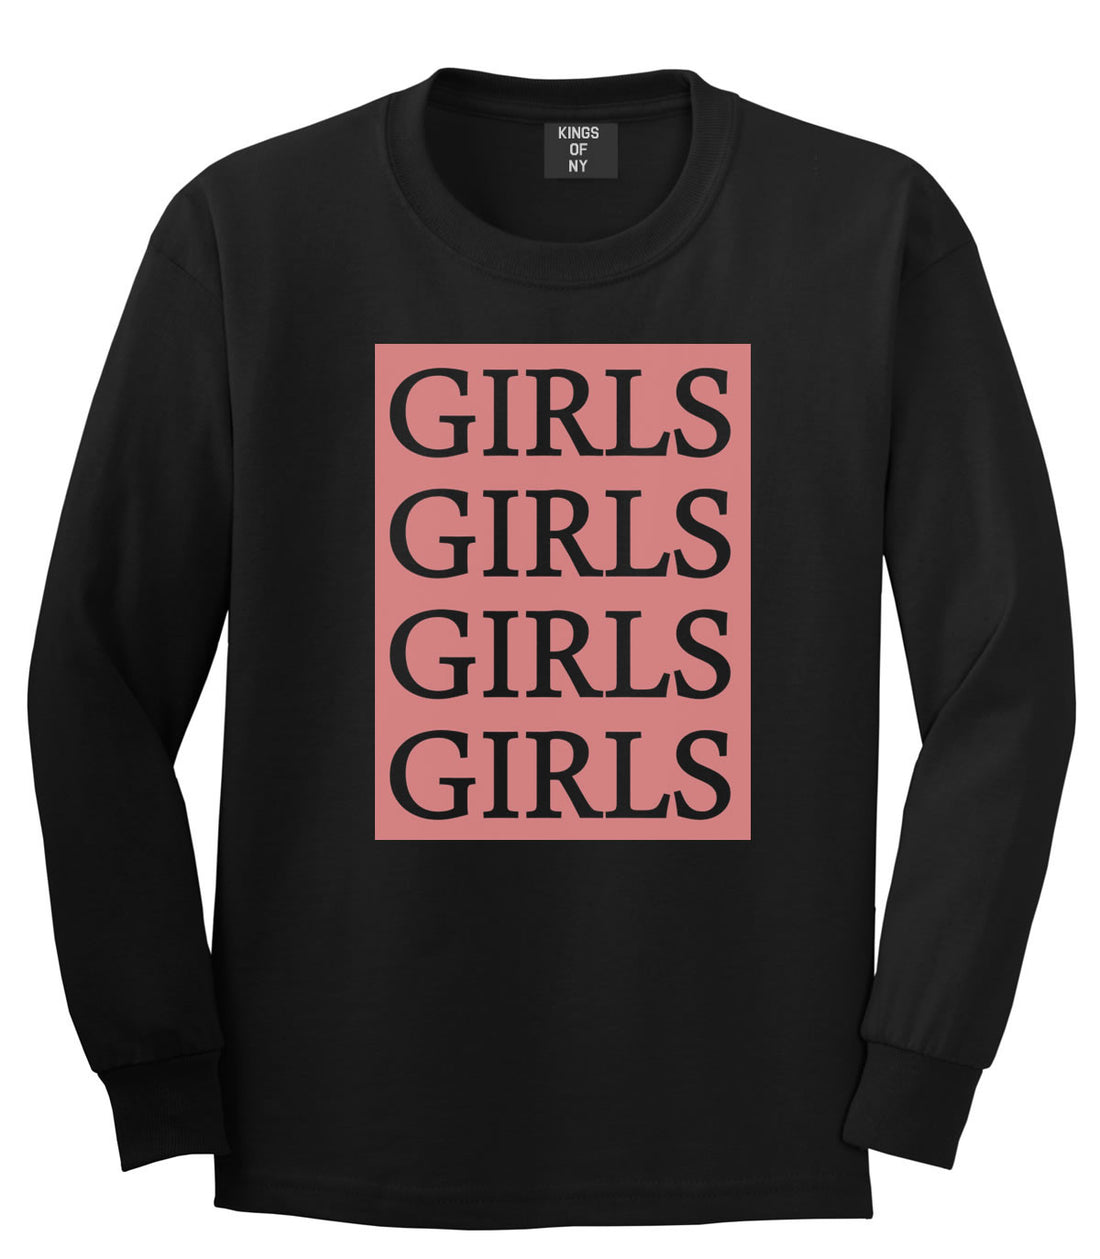 Girls Girls Girls Boys Kids Long Sleeve T-Shirt in Black by Kings Of NY